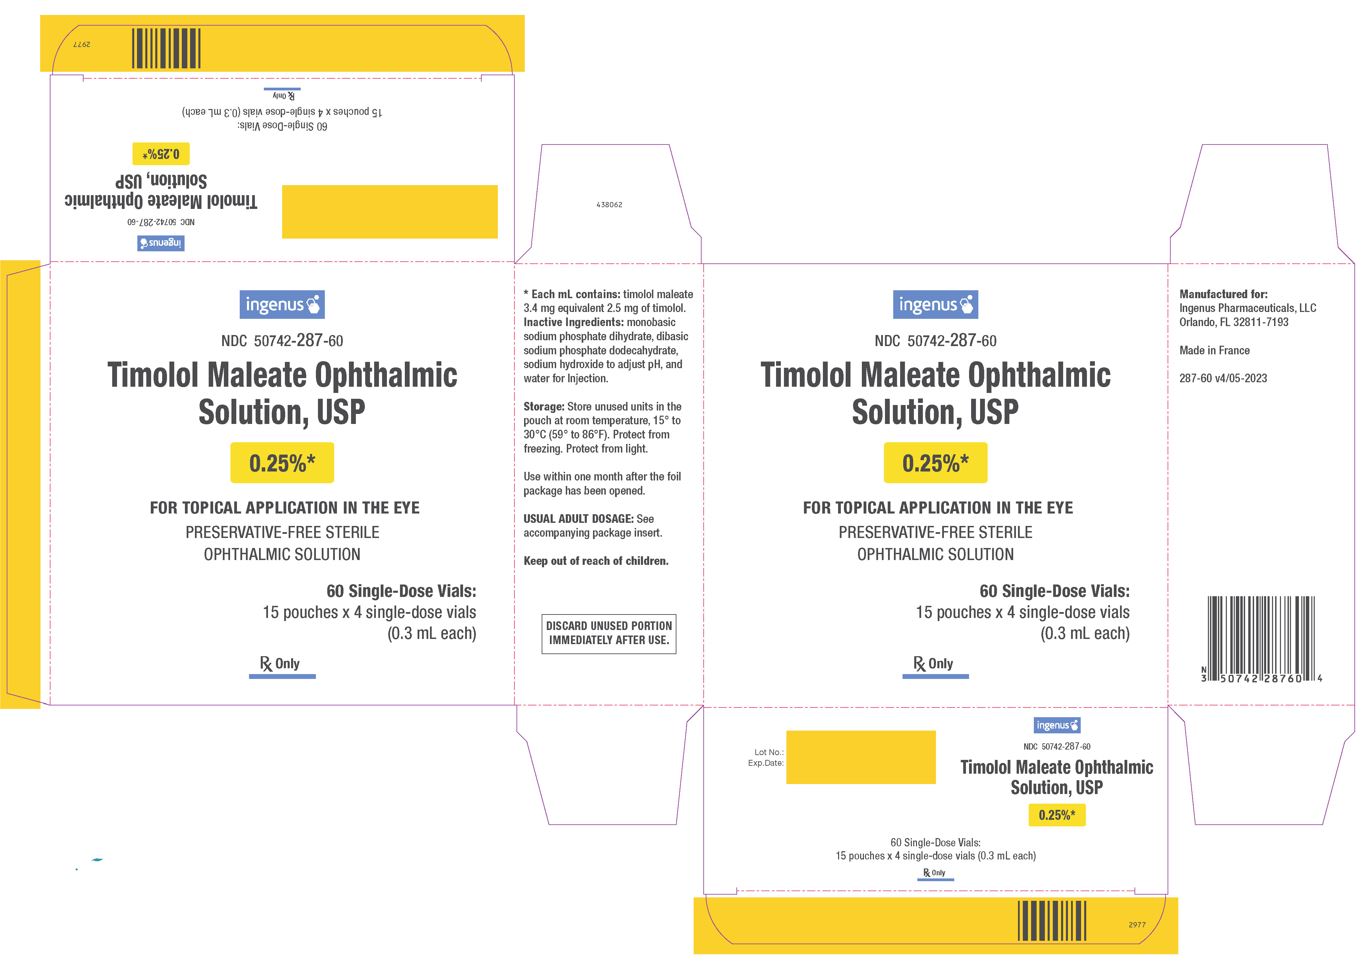 Timolol Maleate Ophthalmic Solution USP, 0.25% - Carton Label